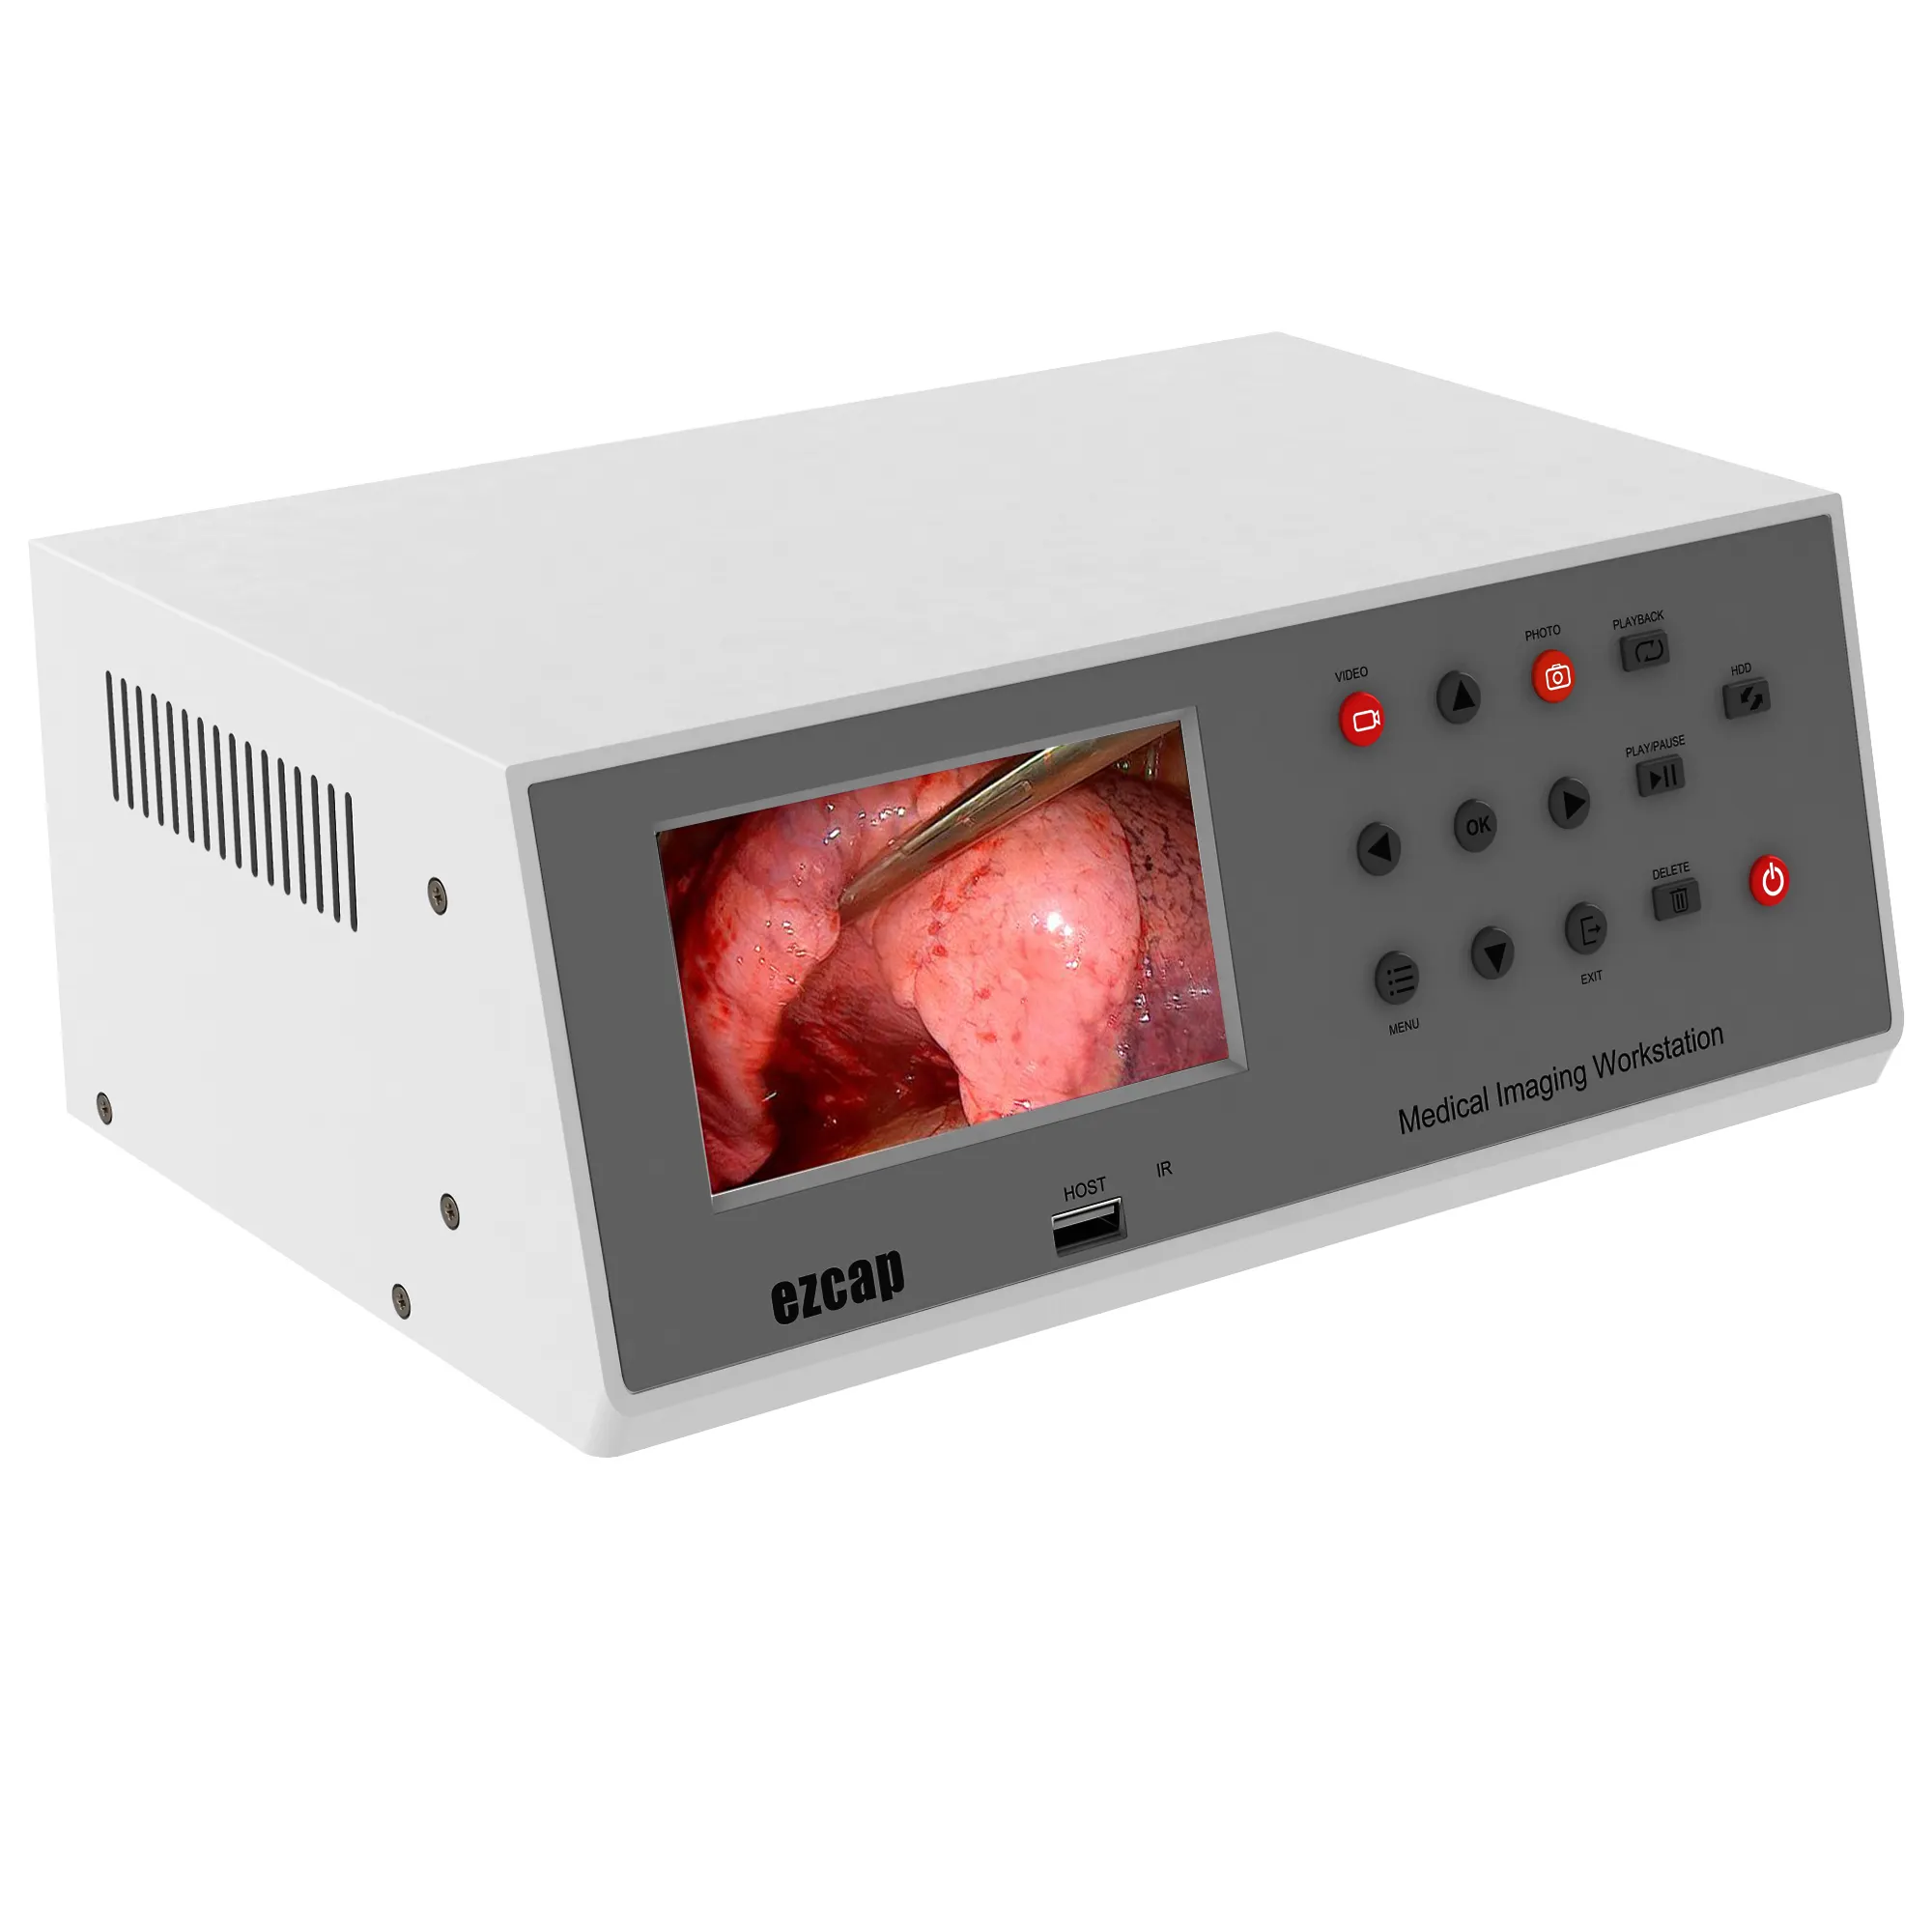 Ezcap Medical Imaging WorkstationHDMIビデオキャプチャサポートSDI、DVI、VGA、HDMI、コンポーネントビデオおよびCVBS INPUT